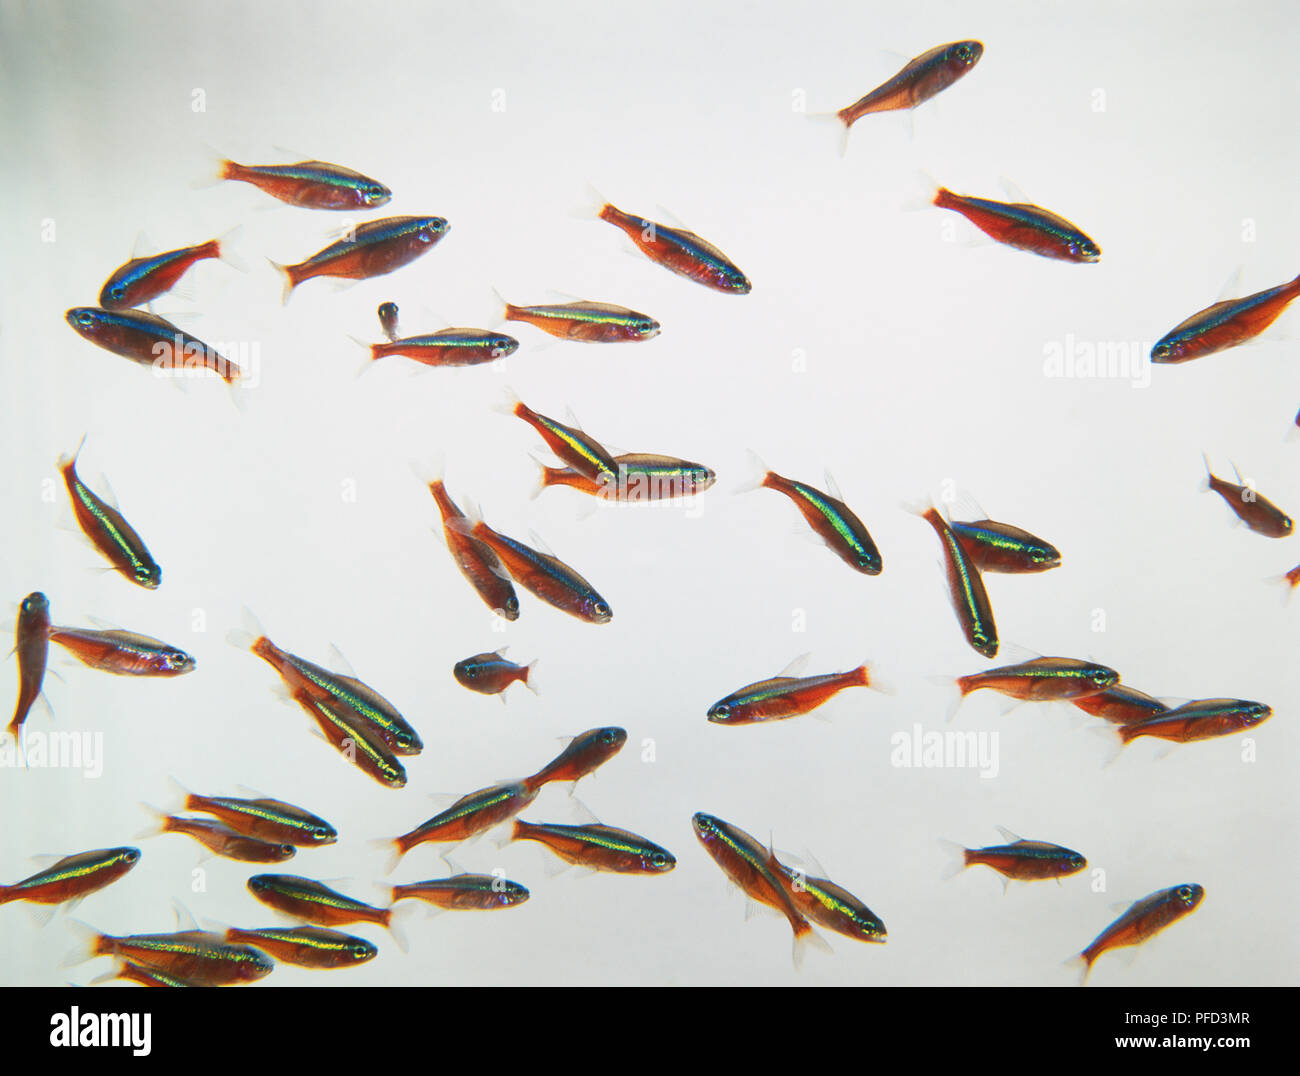 Group of Cardinal Tetras (Paracheirodon axelrodi), red, yellow and blue striped fish. Stock Photo